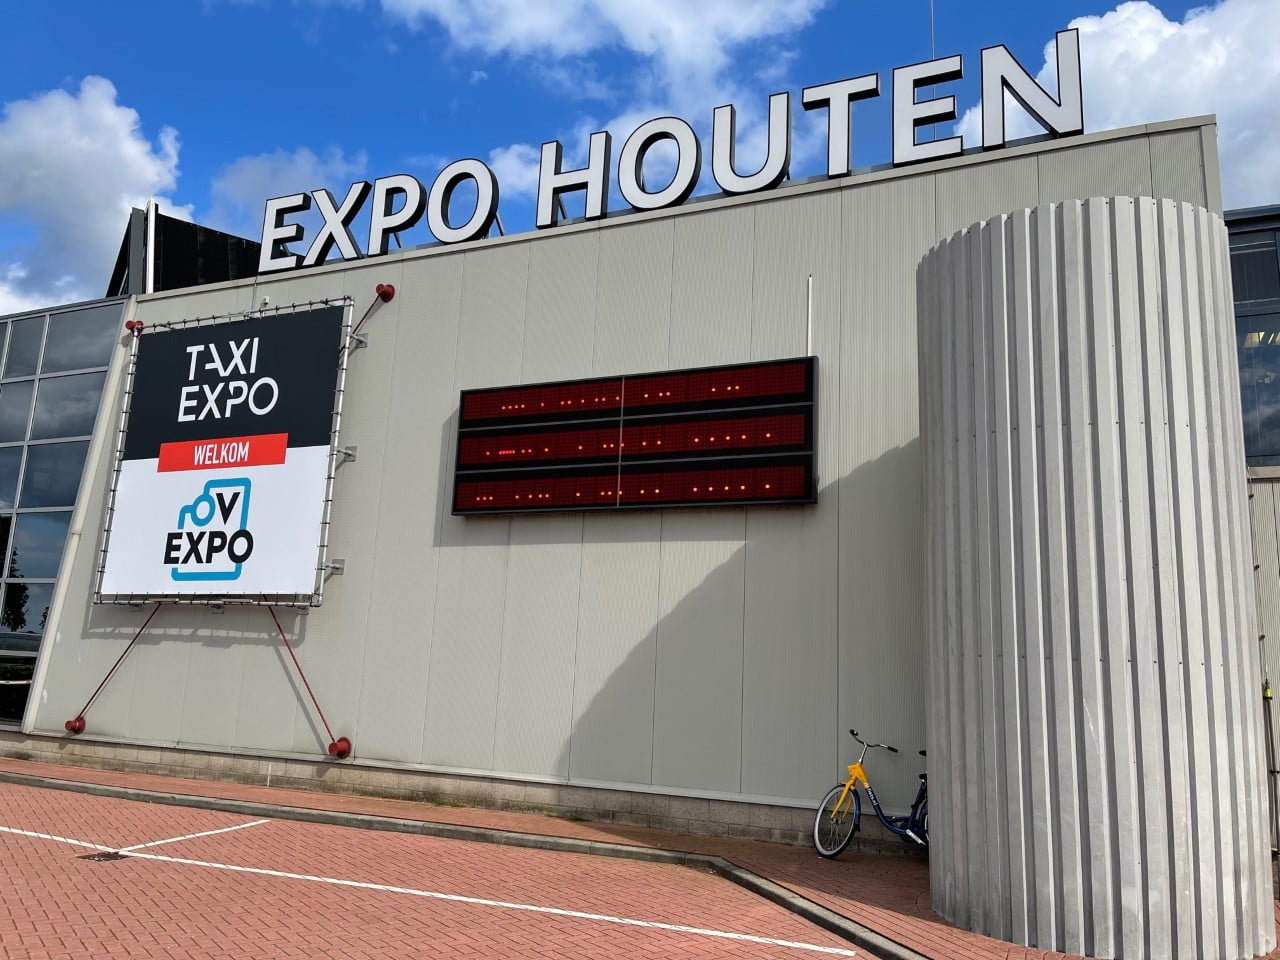 Taxi Expo, ένας ειδικός χώρος συνάντησης